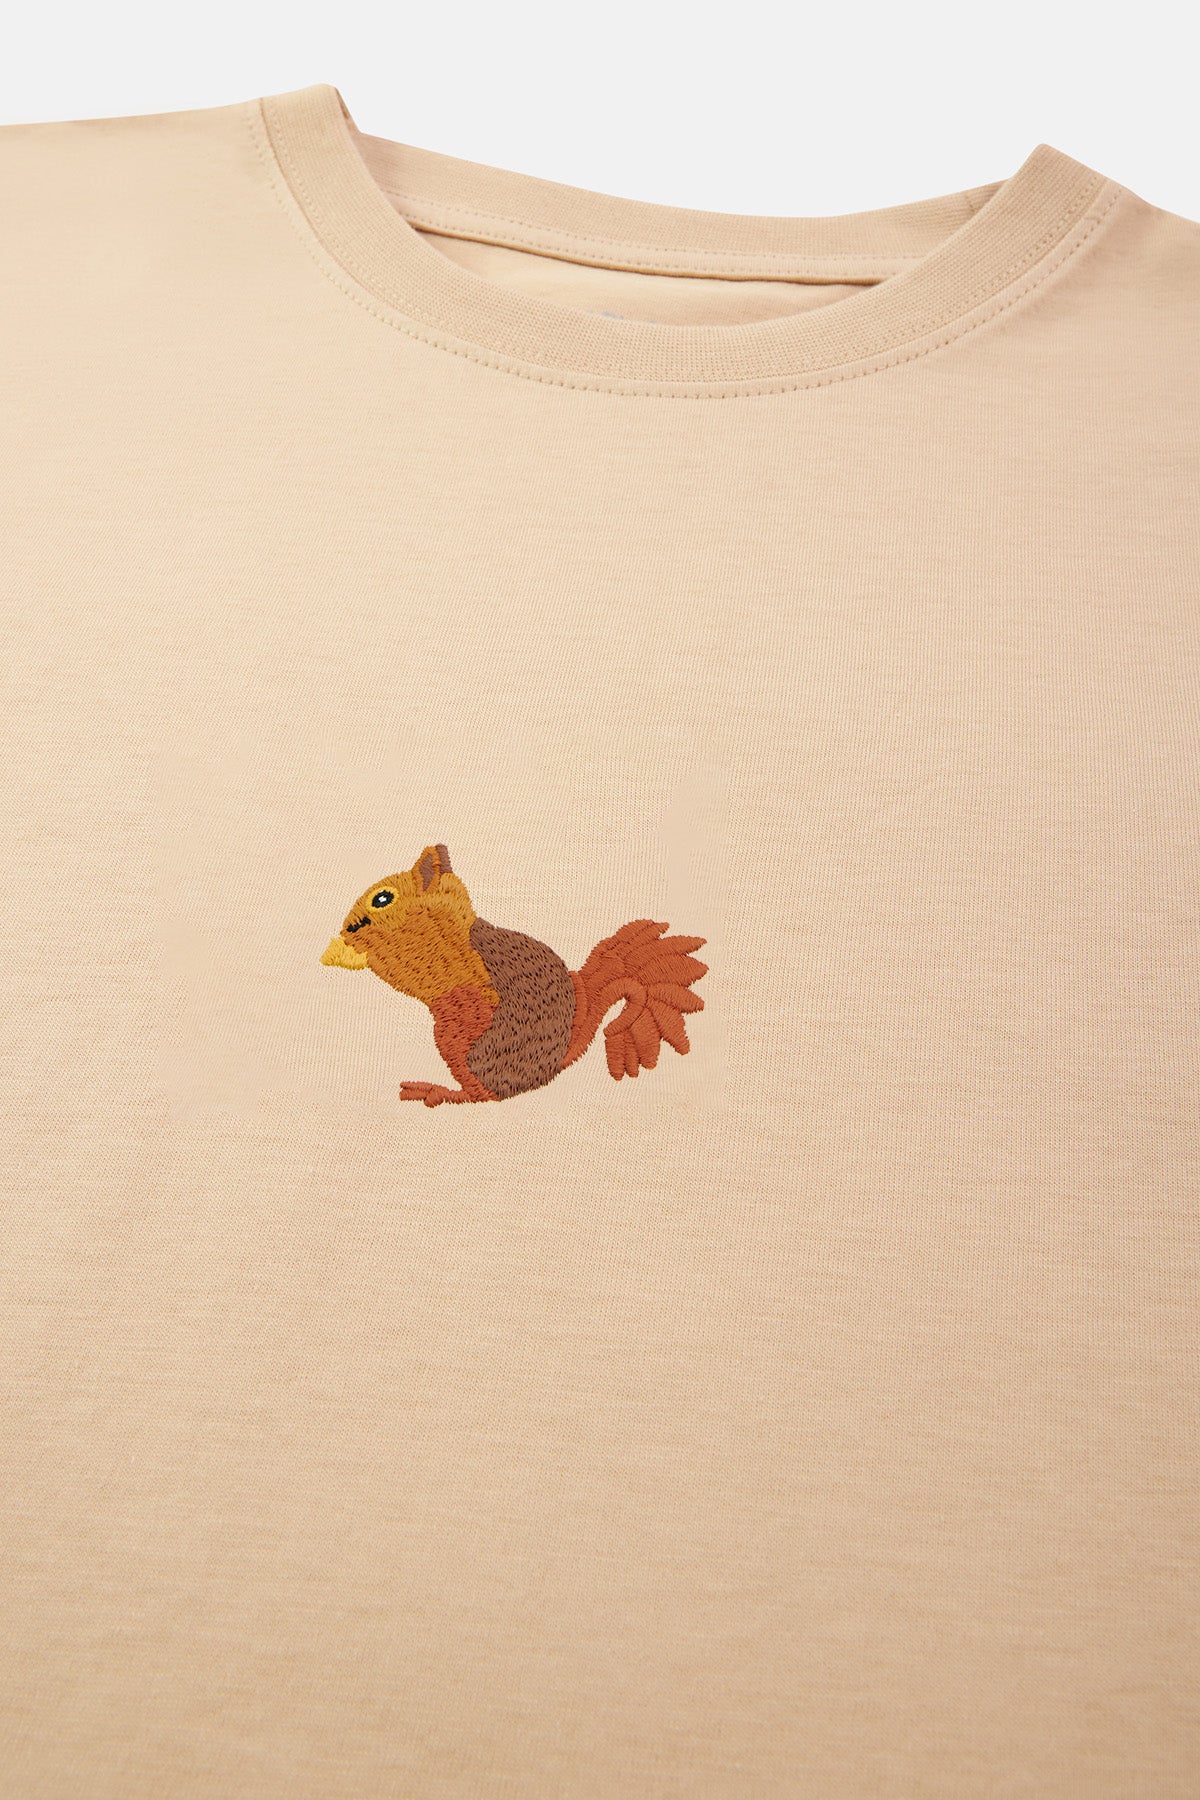 Sincap Soft T-Shirt  - Parşömen Bej